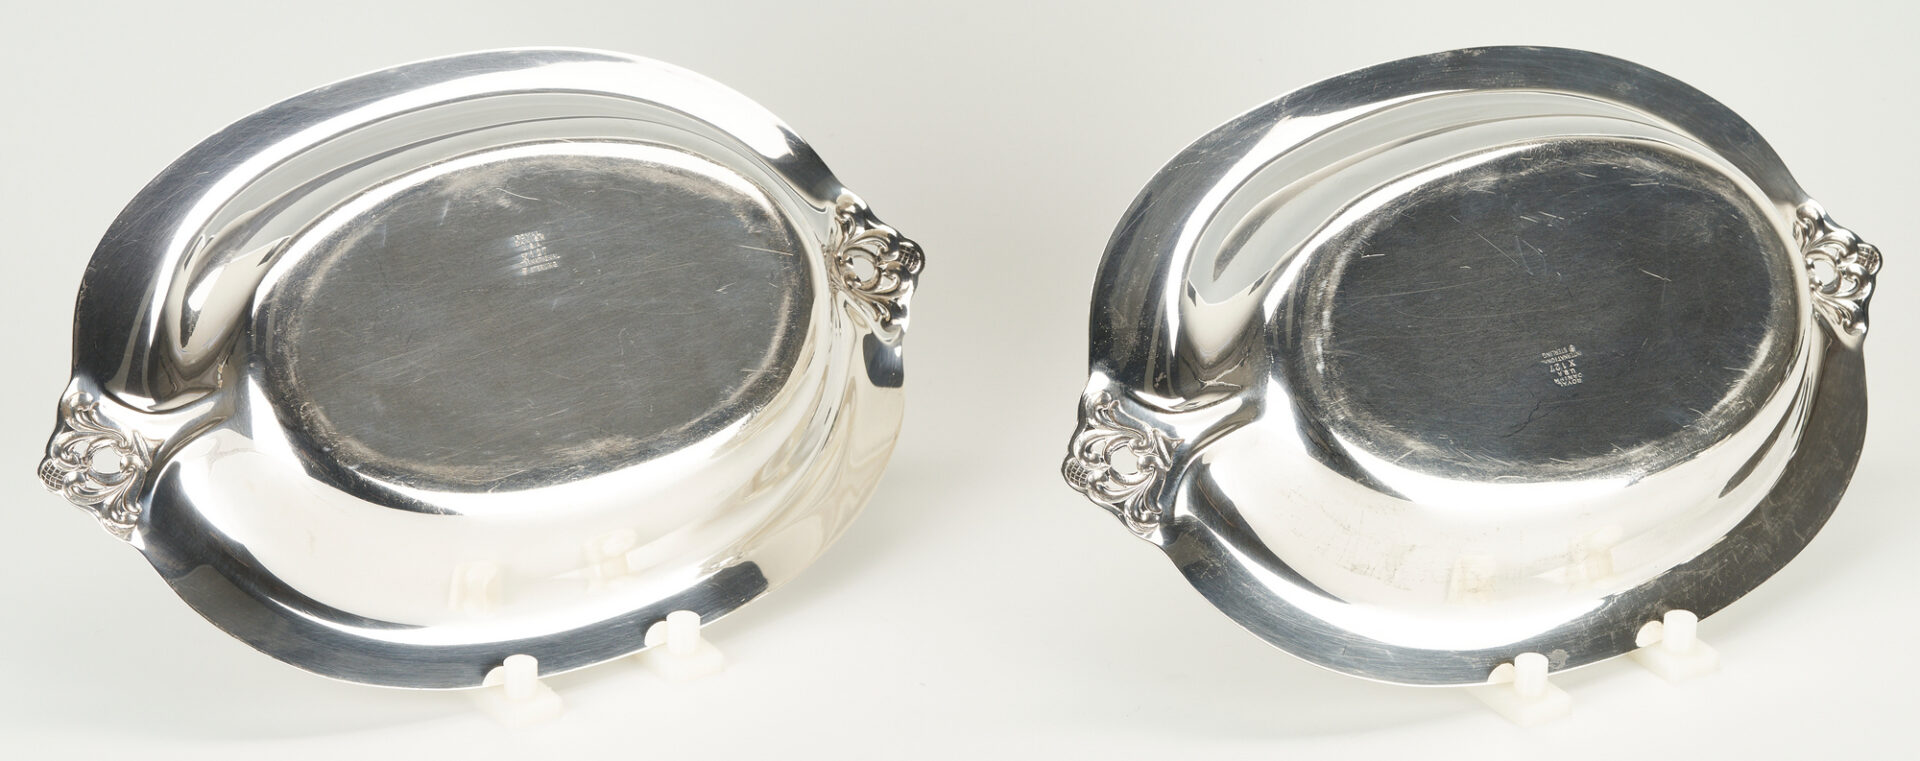 Lot 1014: 4 Pcs. International Sterling Silver Hollowware, Royal Danish & Courtship